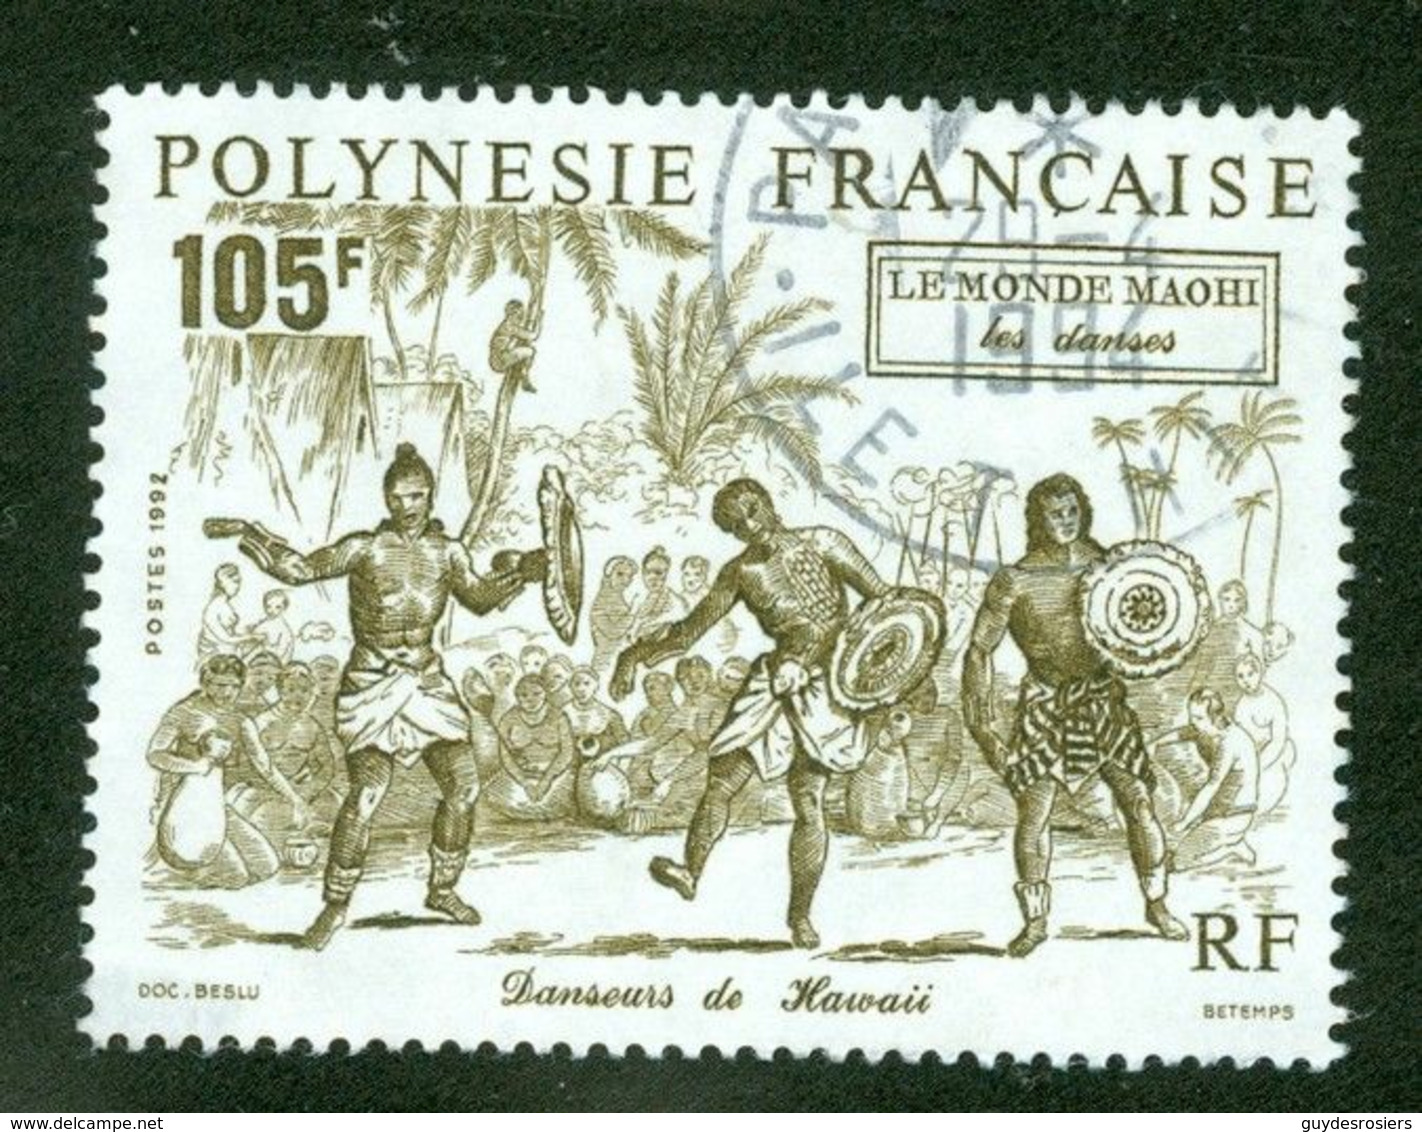 Maori, Danseurs; Polynésie Française / French Polynesia; Scott # 595; Usagé (3429) - Used Stamps